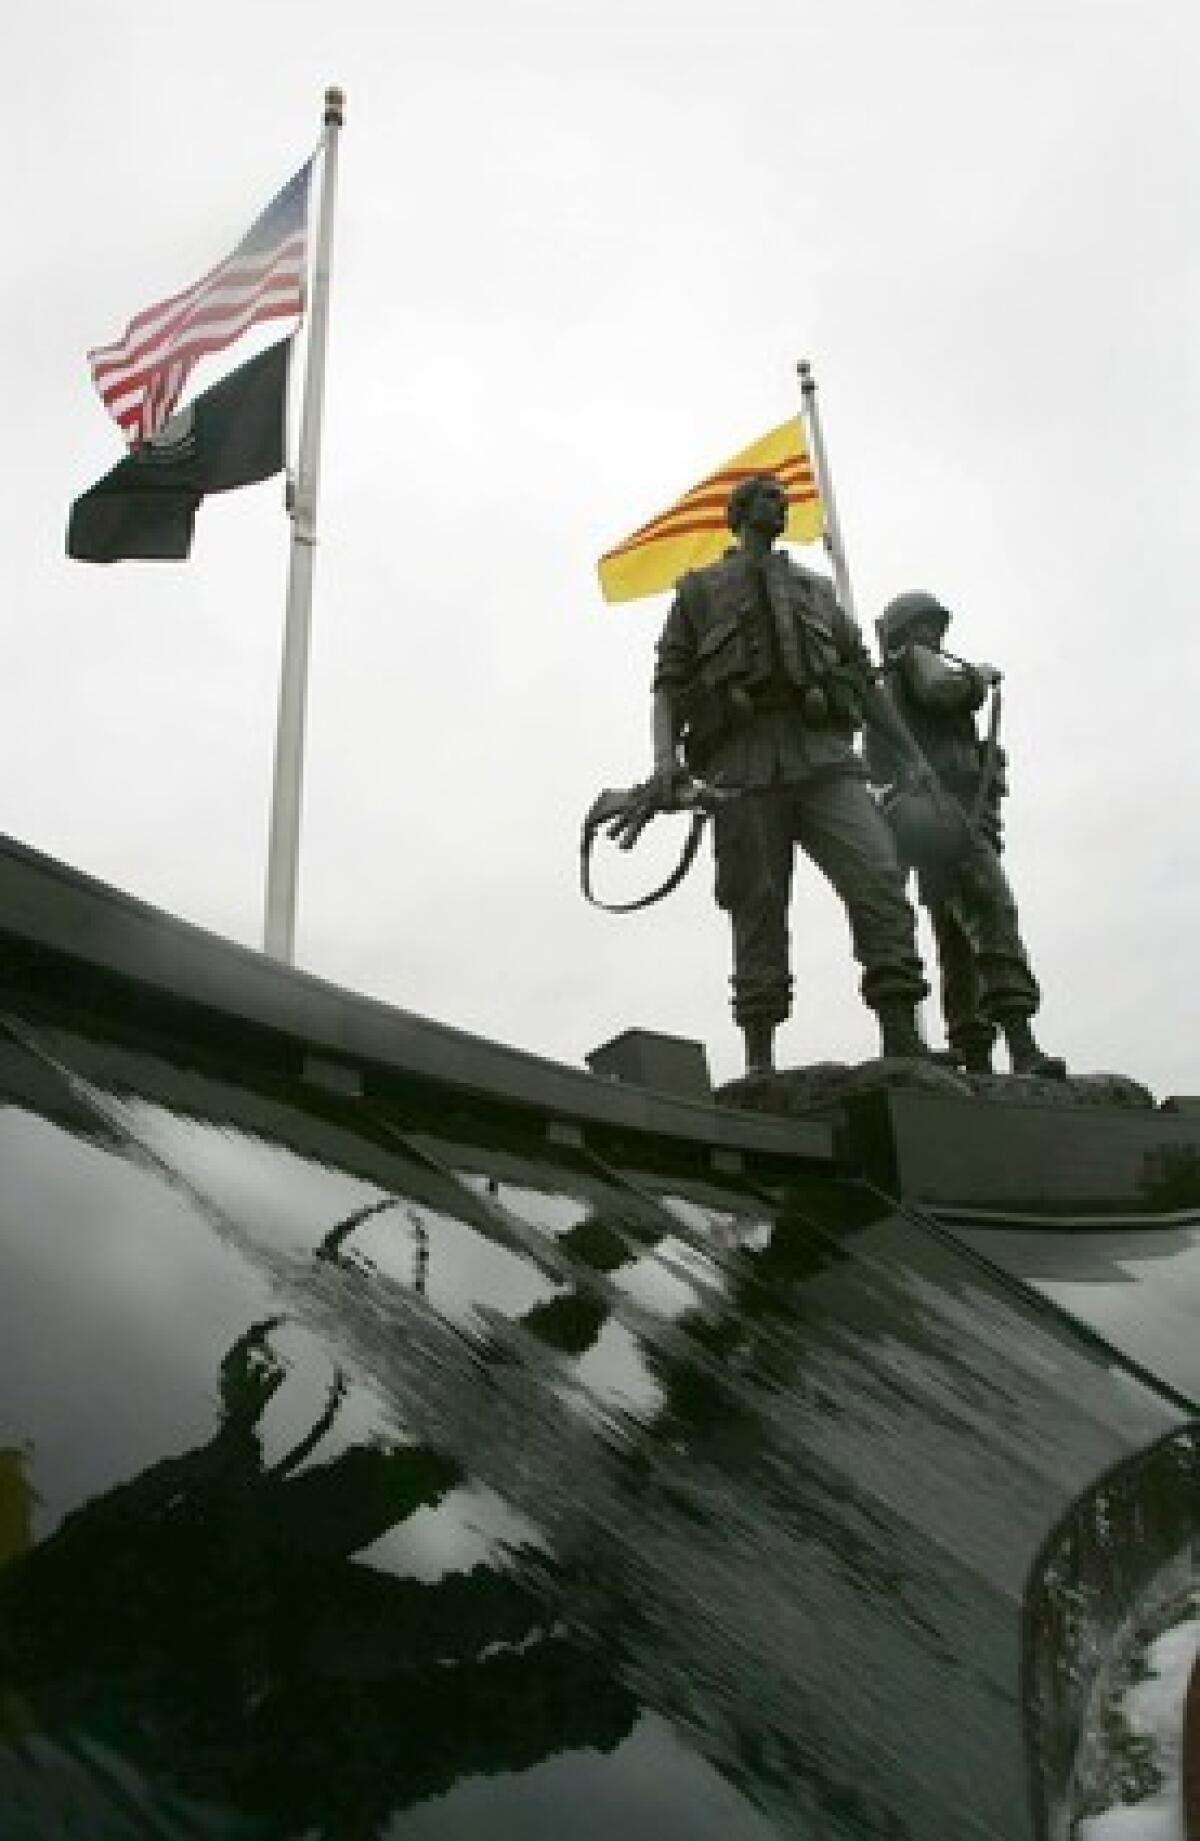  A Vietnam veteran traces a name on the Vietnam Veterans Memorial